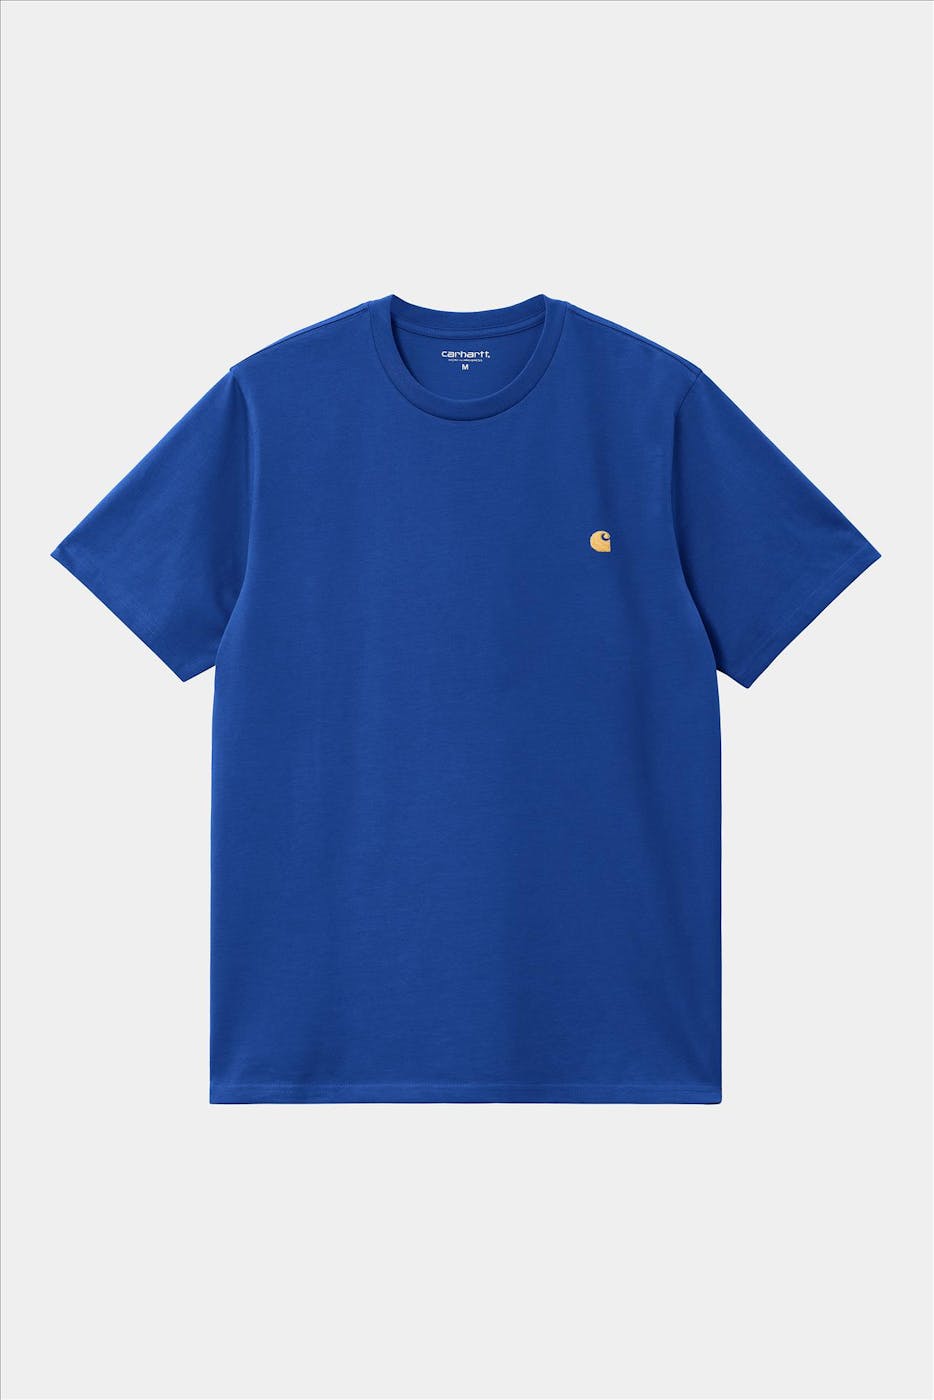 Carhartt WIP - Kobaltblauwe Chase T-shirt